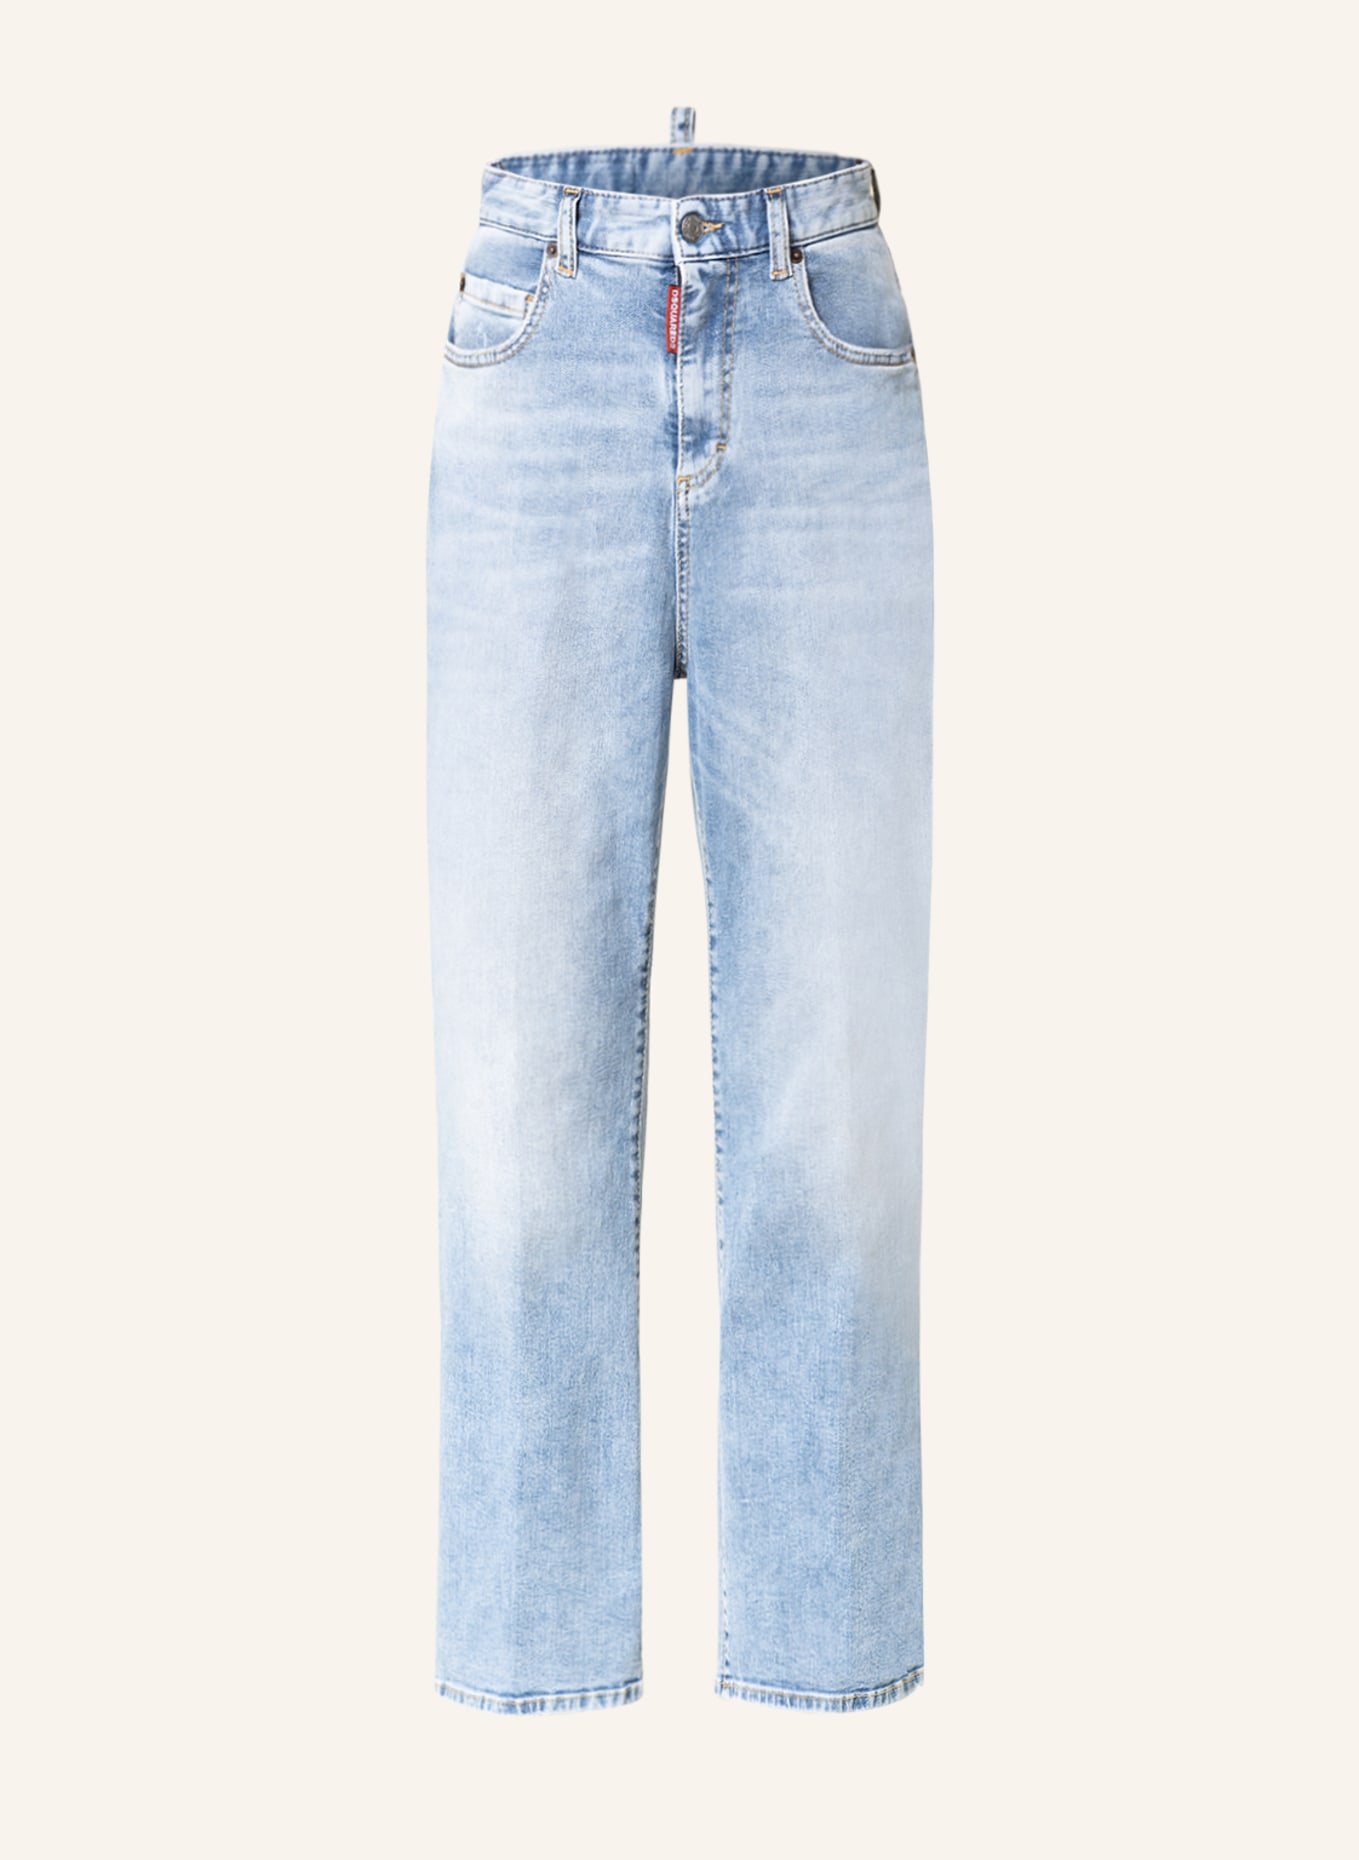 DSQUARED2 Flared Jeans HONEY, Farbe: 470 BLUE NAVY (Bild 1)